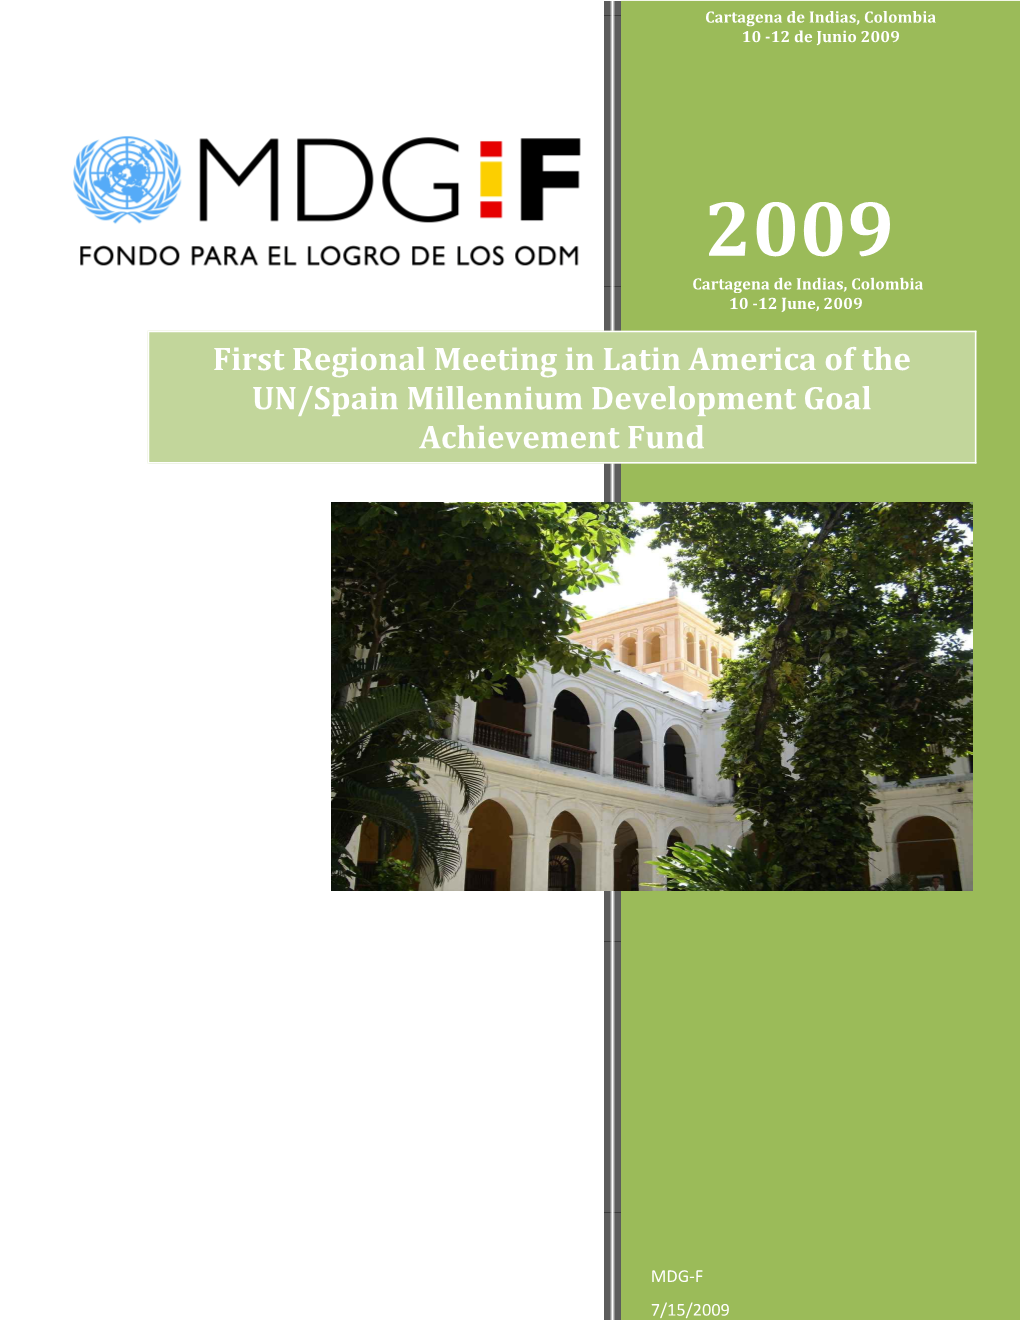 First Regional Meeting in Latin America of the UN/Spain Millennium Development Goal Achievement